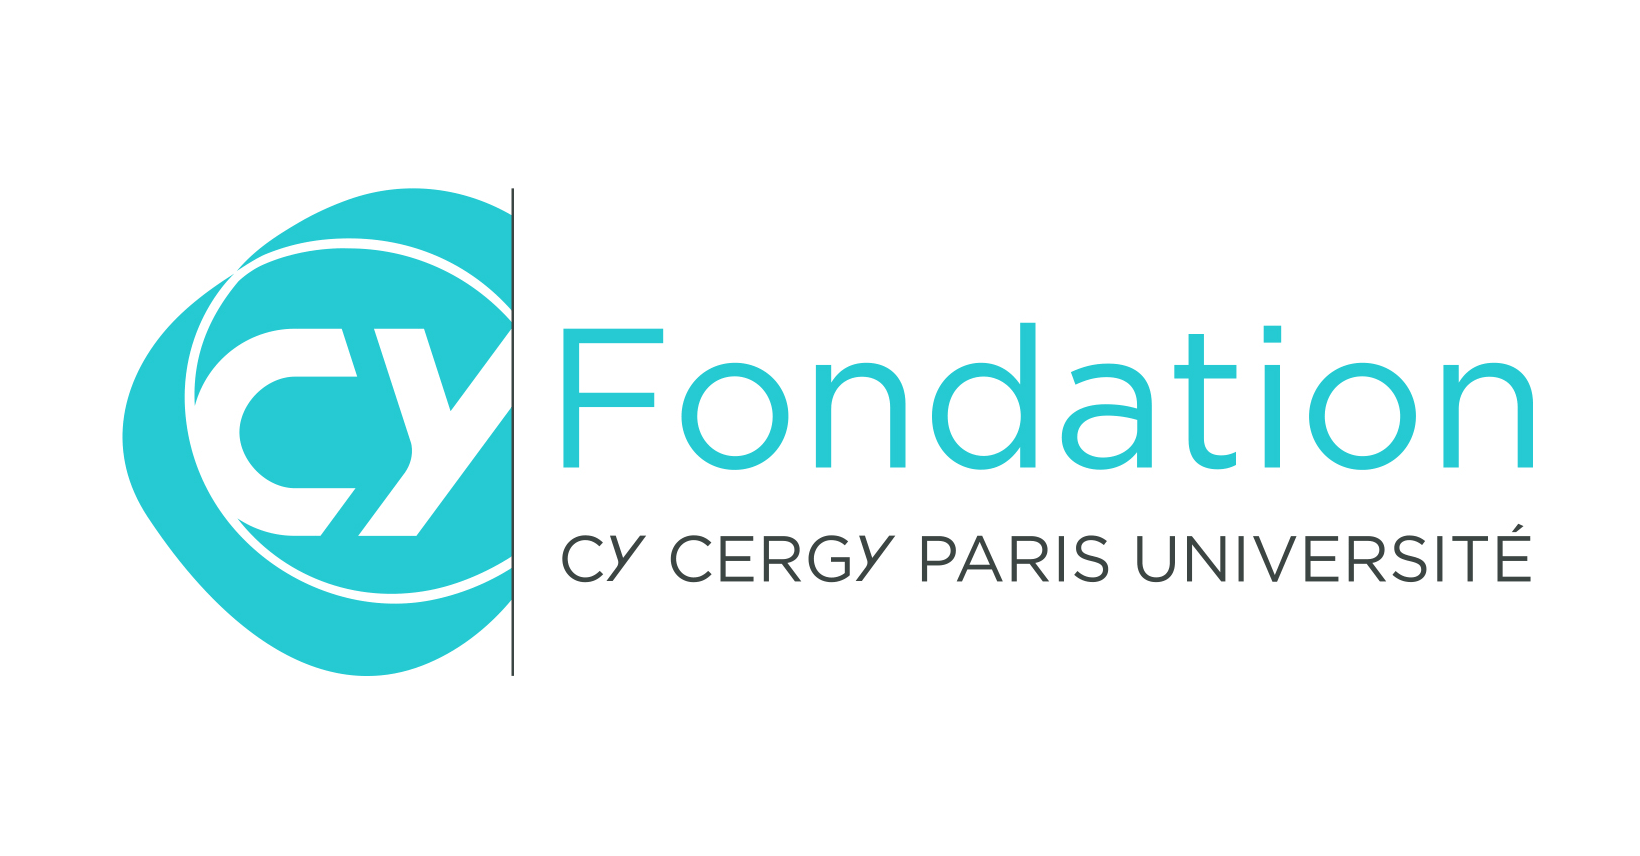 cy fondation logo